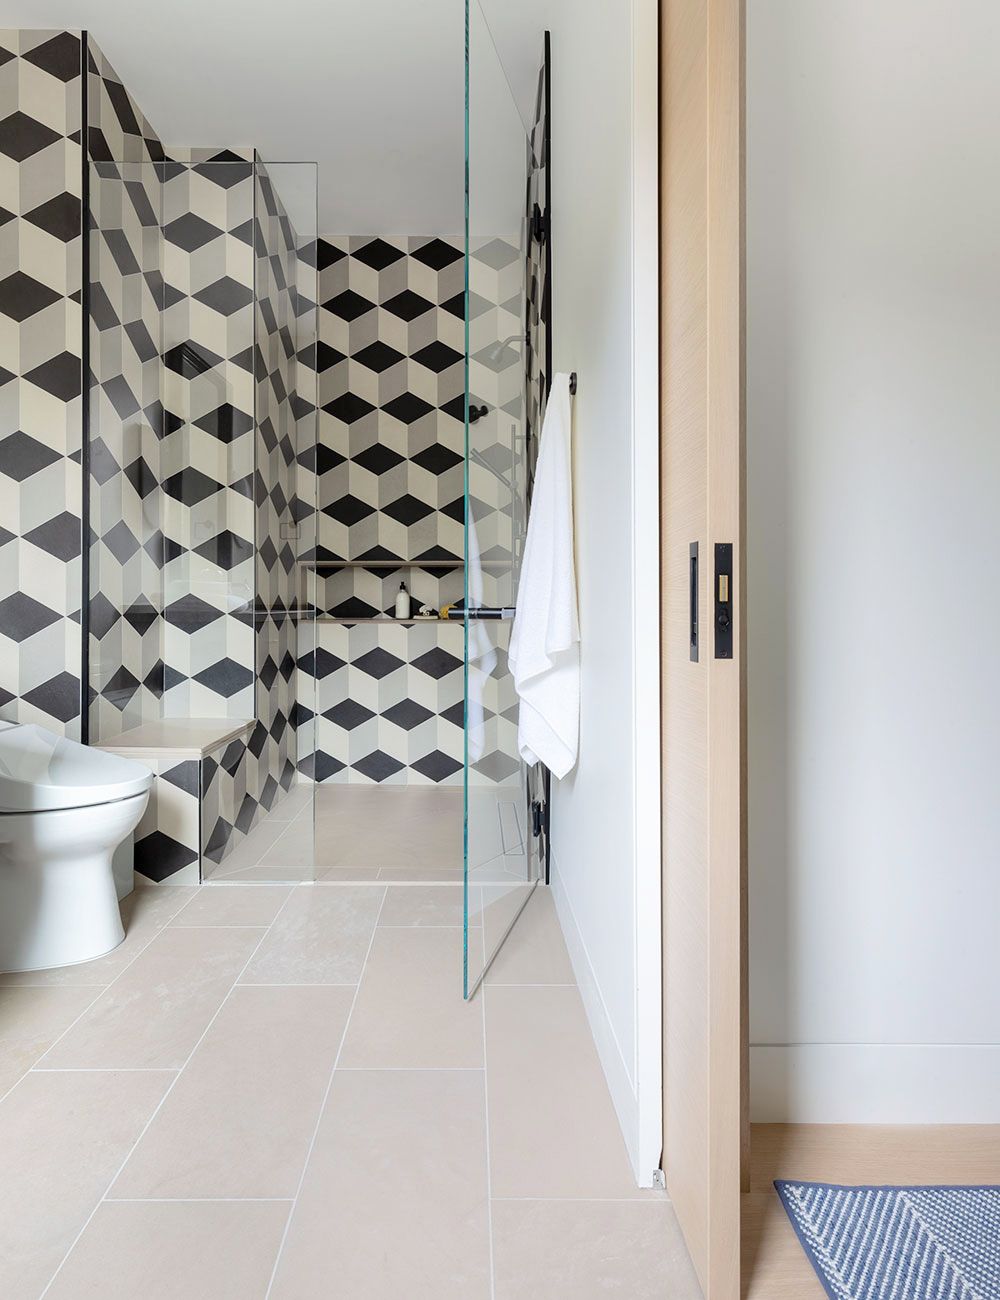 48 Bathroom Tile Ideas Bath, Unique Bathroom Tile